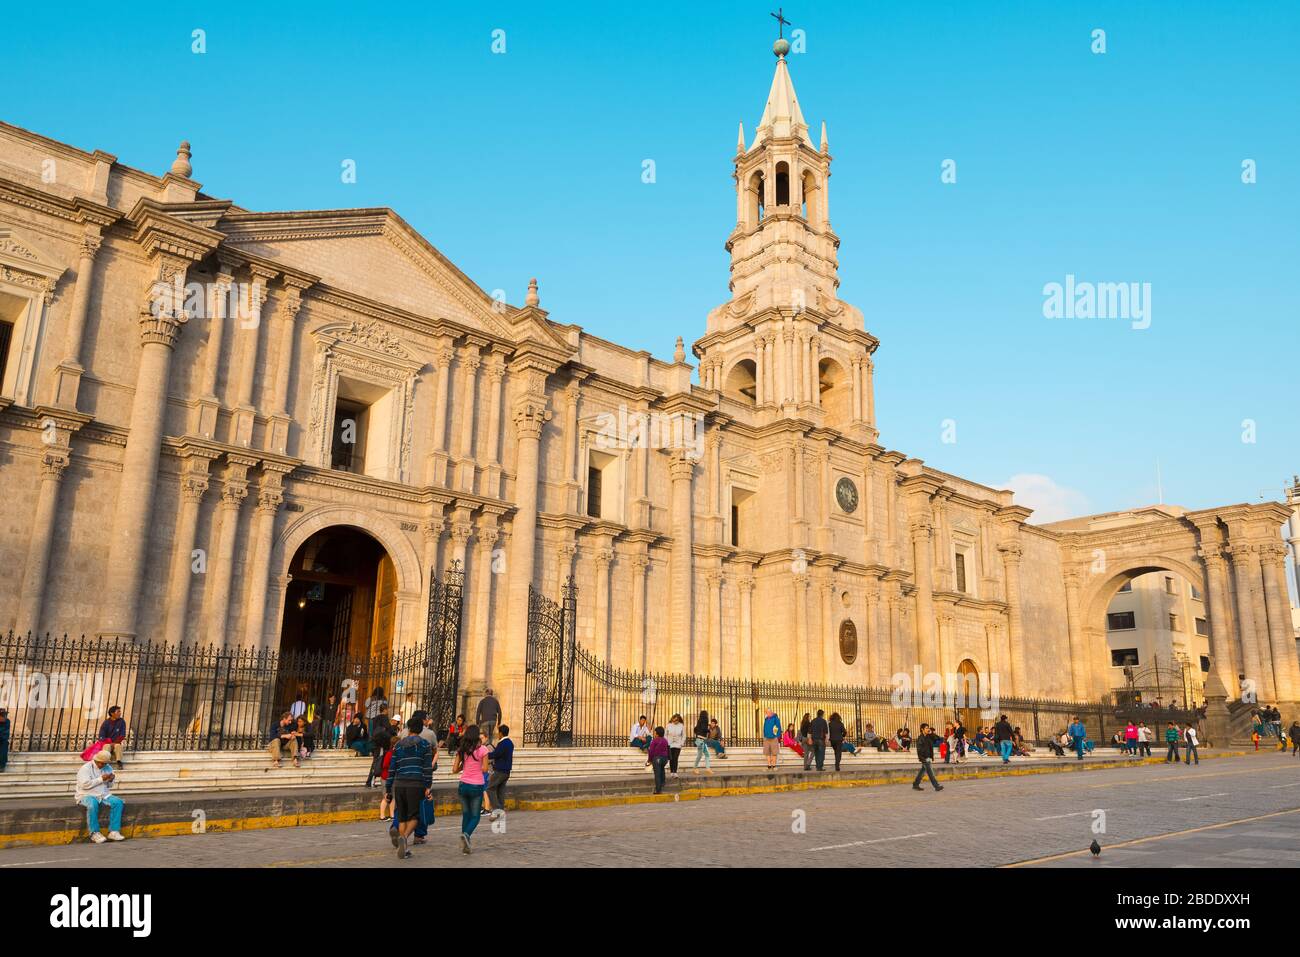 Arequipa, Provincia de Arequipa, Peru - People outside the cathedral Catedral basilica de Arequipa at the main square. Stock Photo